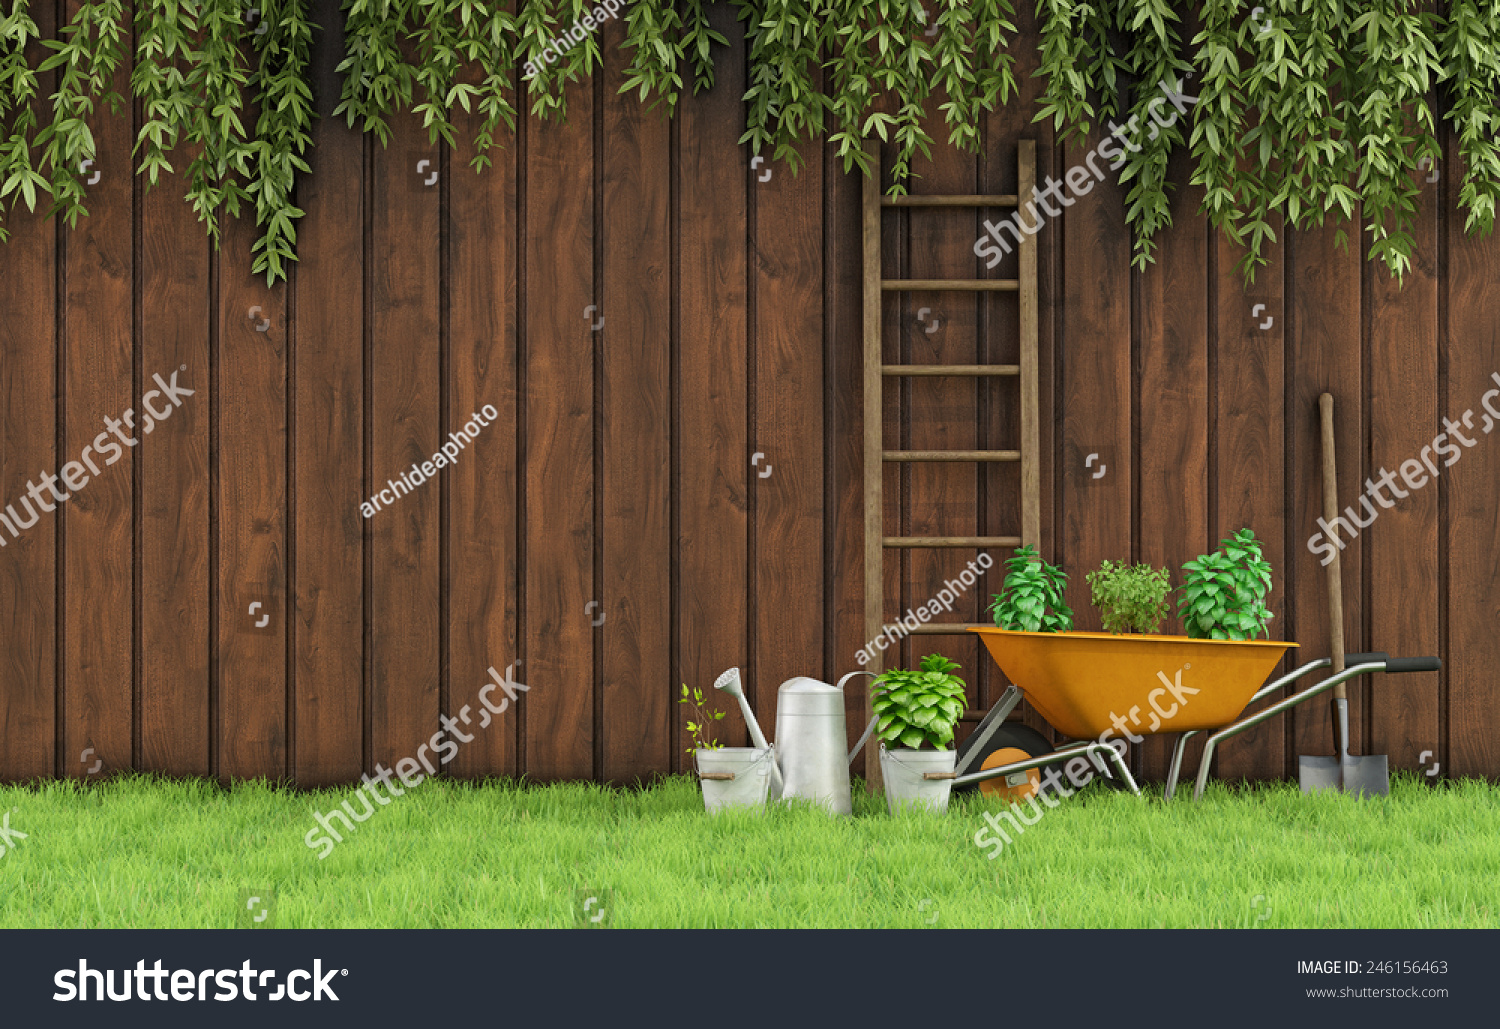 Garden Old Wooden Fence Tools Gardening3d Stock Illustration 246156463 - Shutterstock